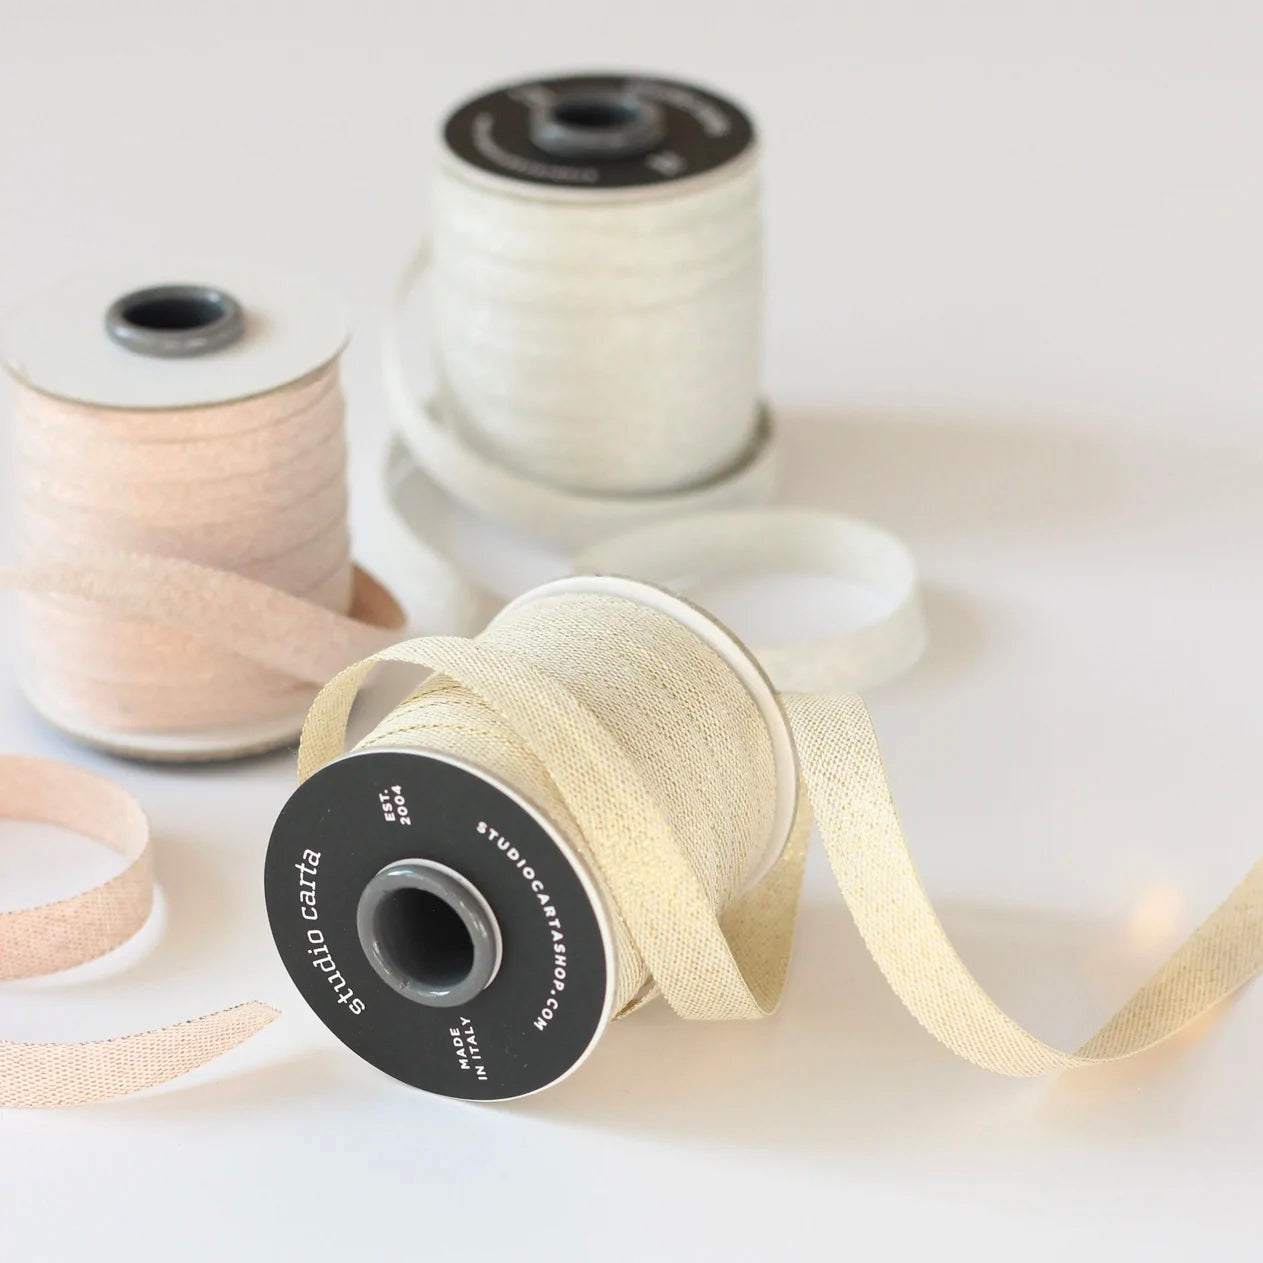 Metallic Woven Cotton Ribbon Spool